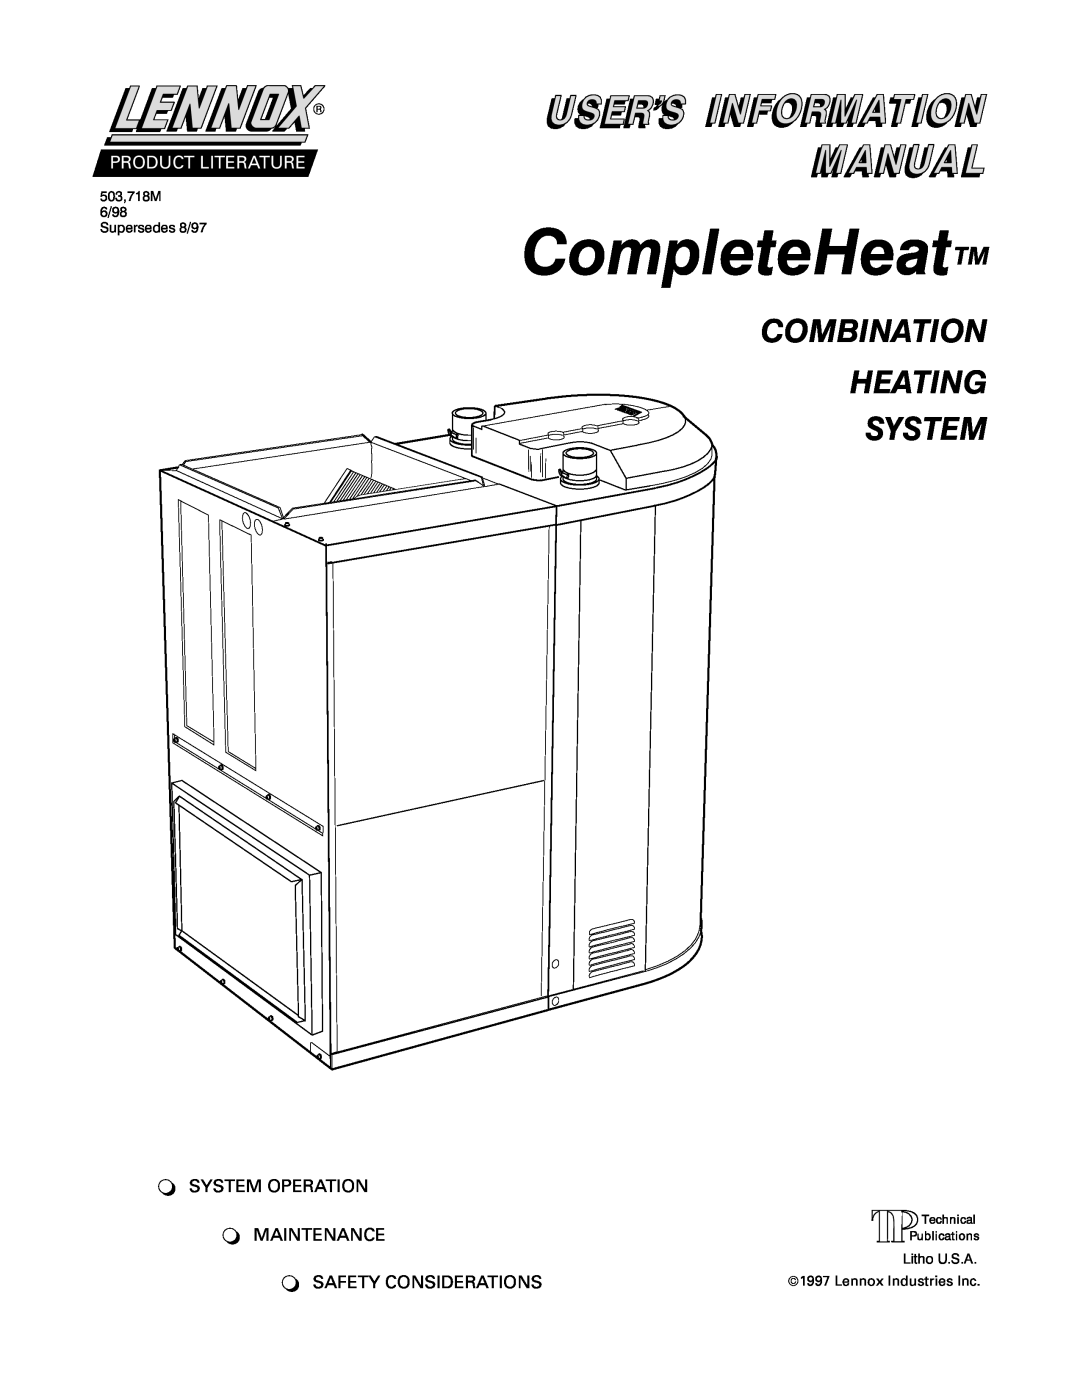 Lennox International Inc Lennox CompleteHeatTM COMBINATION HEATING SYSTEM manual Combination Heating System 